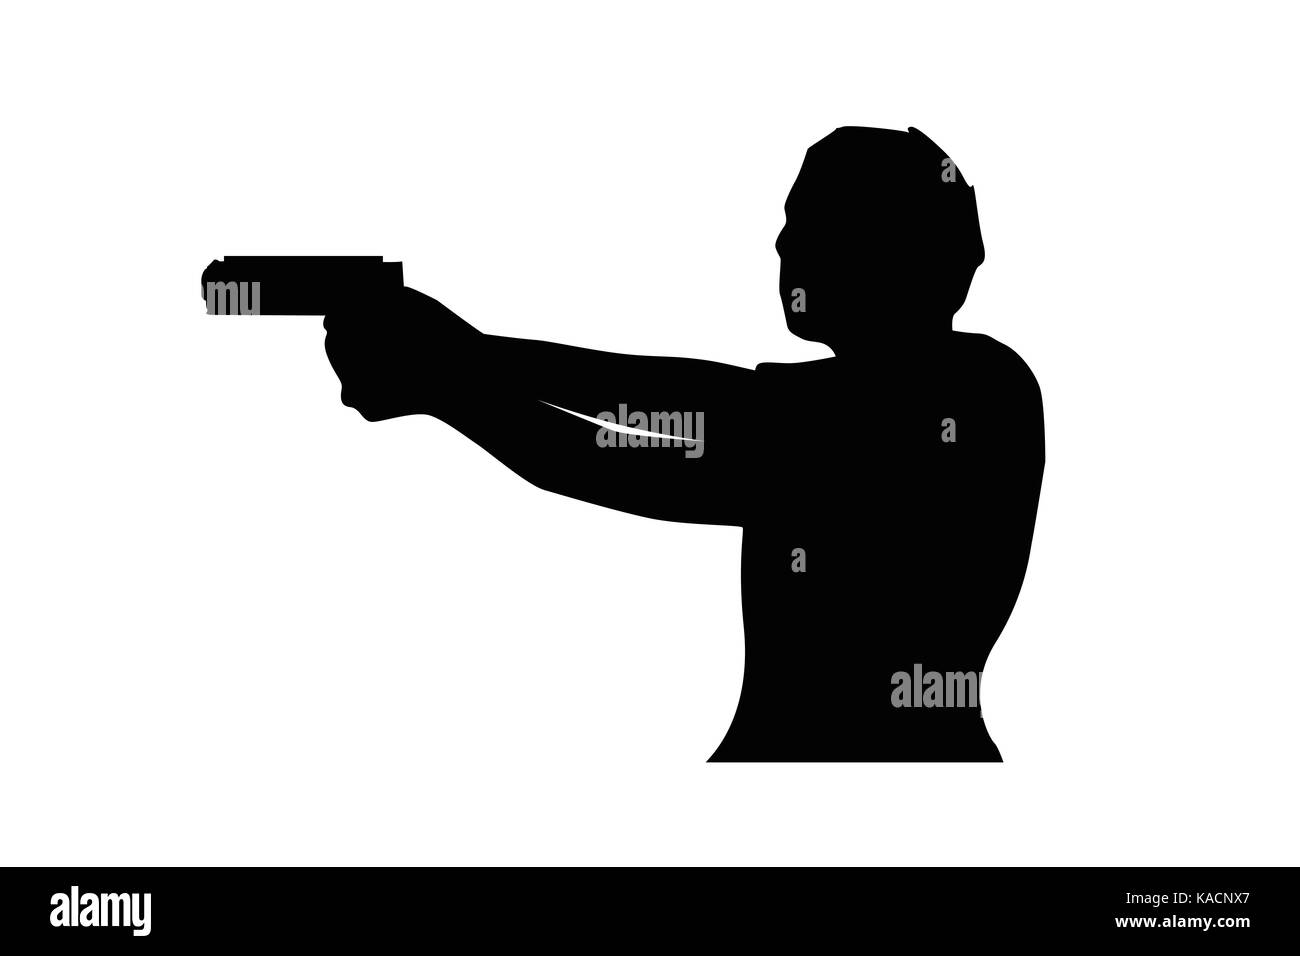 man holds pistol silhouette, illustration design, isolated on white background. Stock Vector